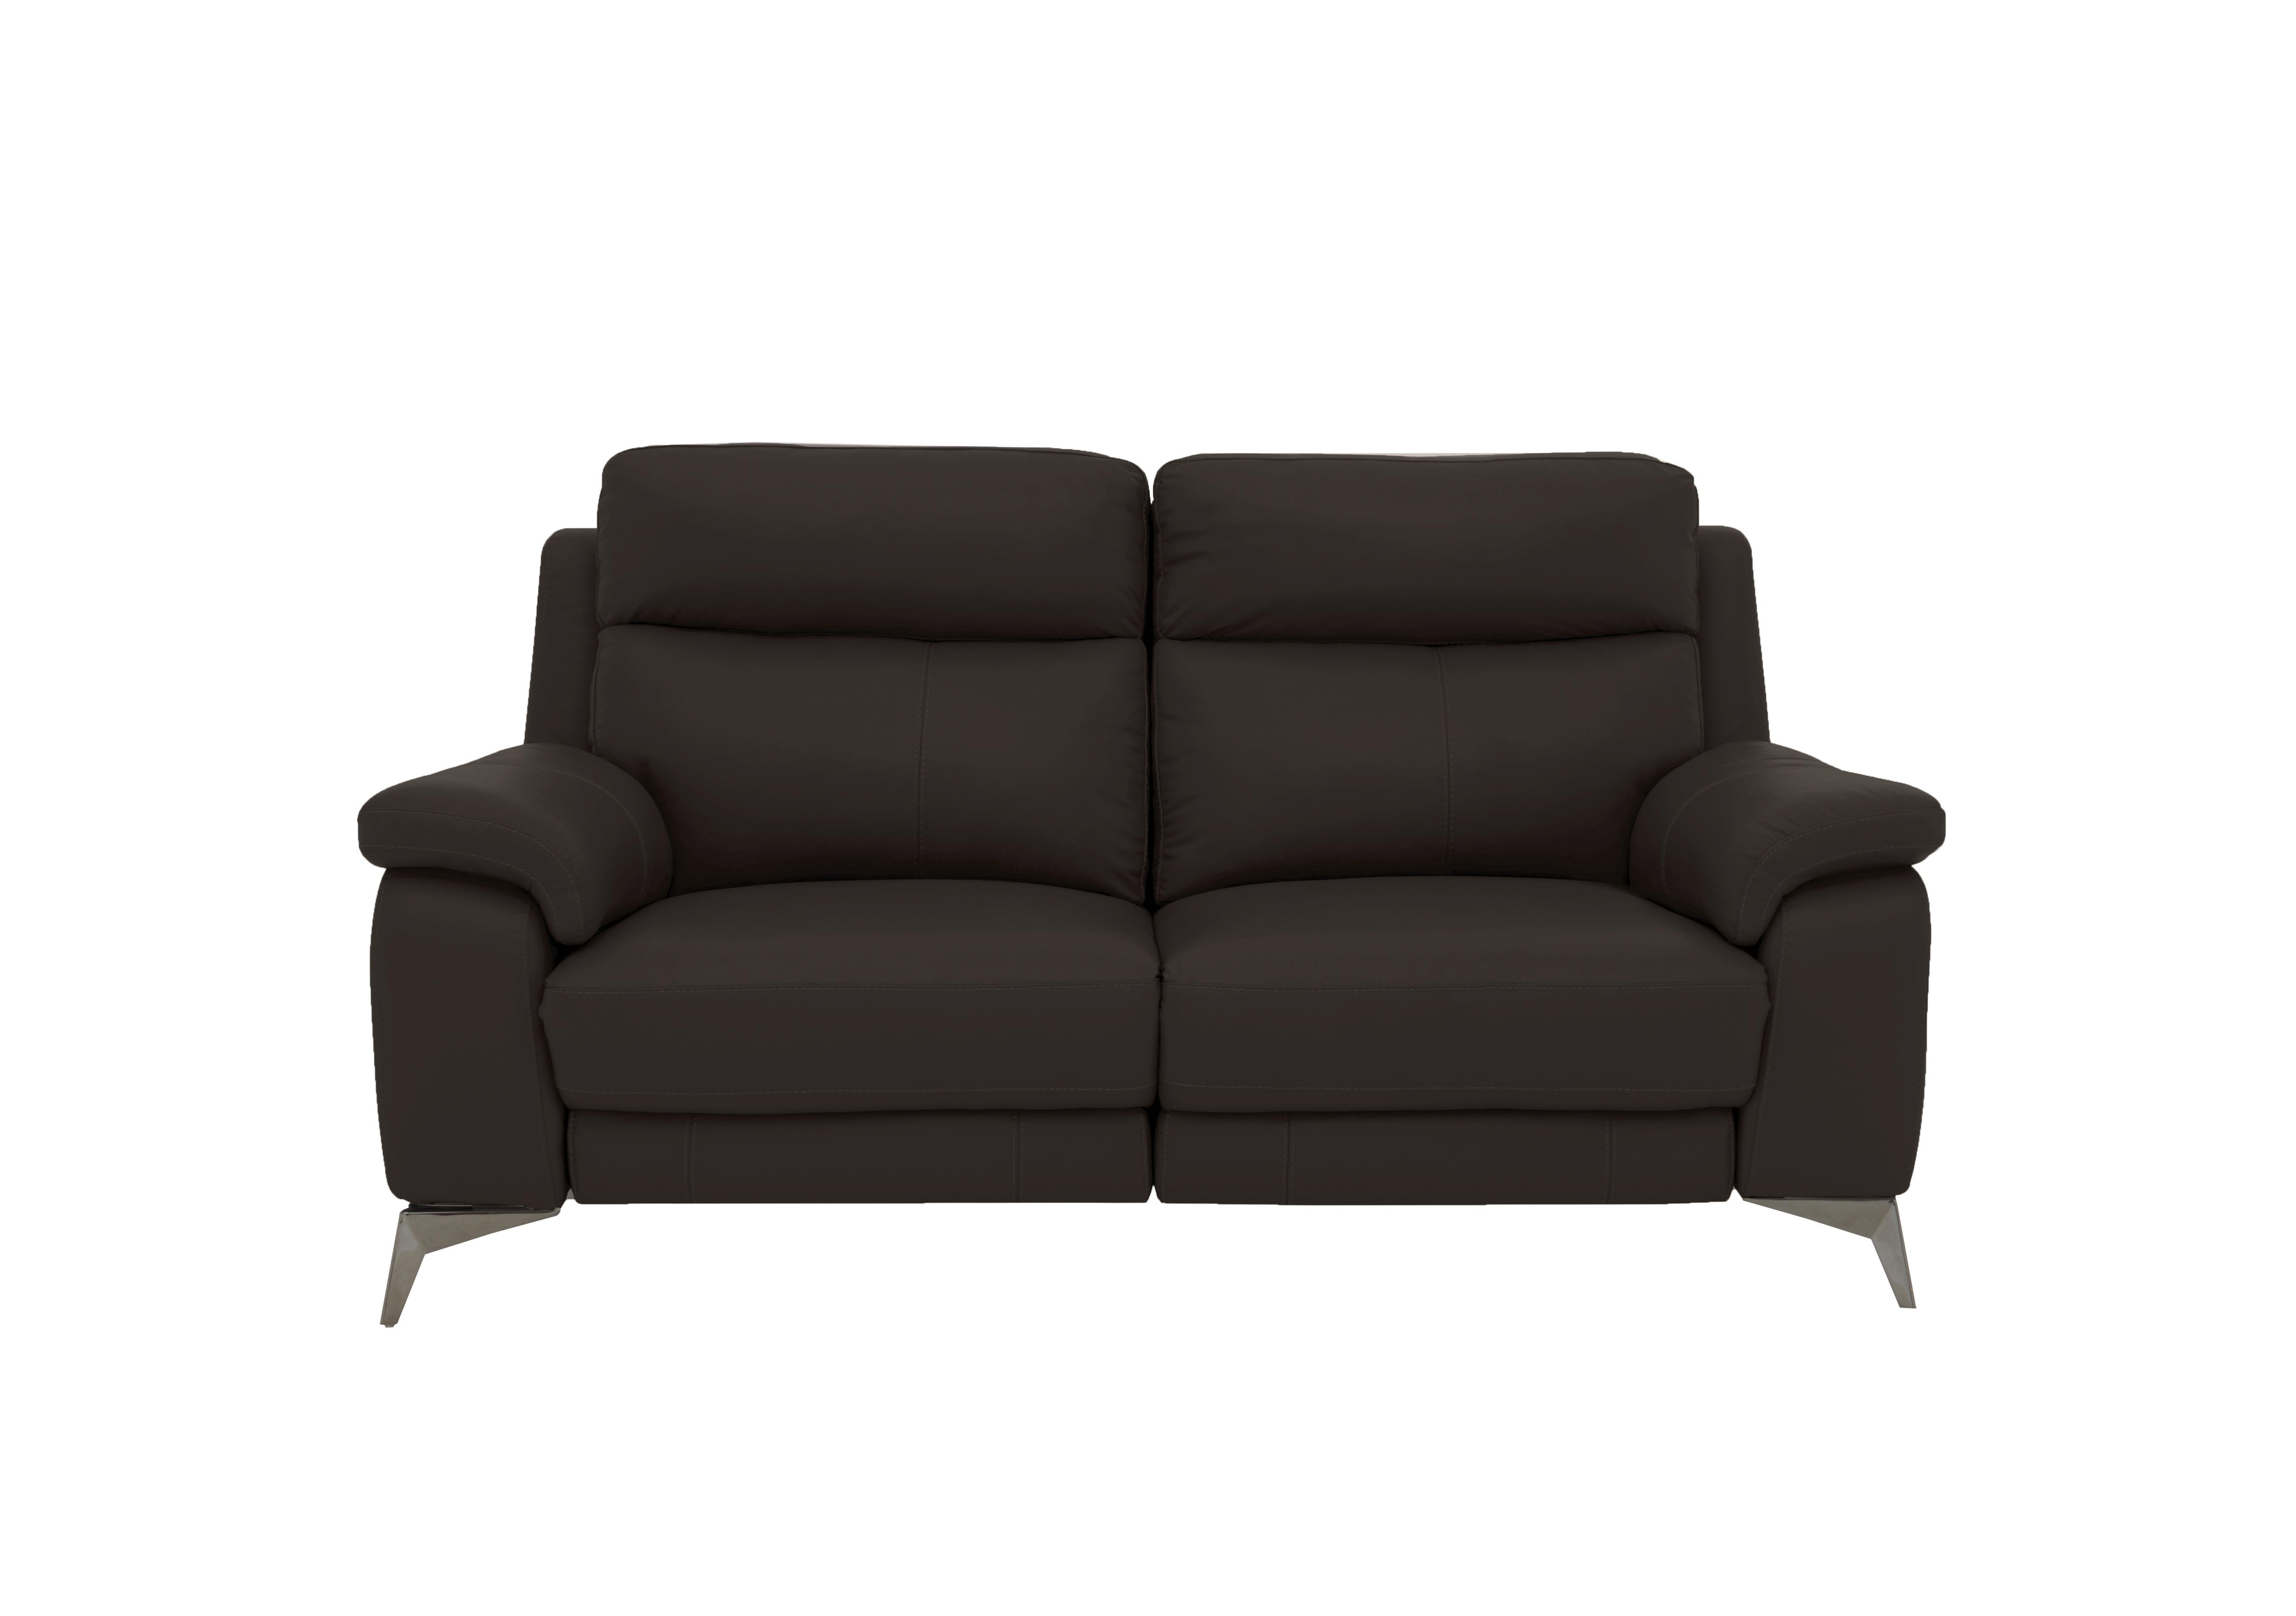 Missouri 2 Seater Leather Sofa in Bv-1748 Dark Chocolate on Furniture Village